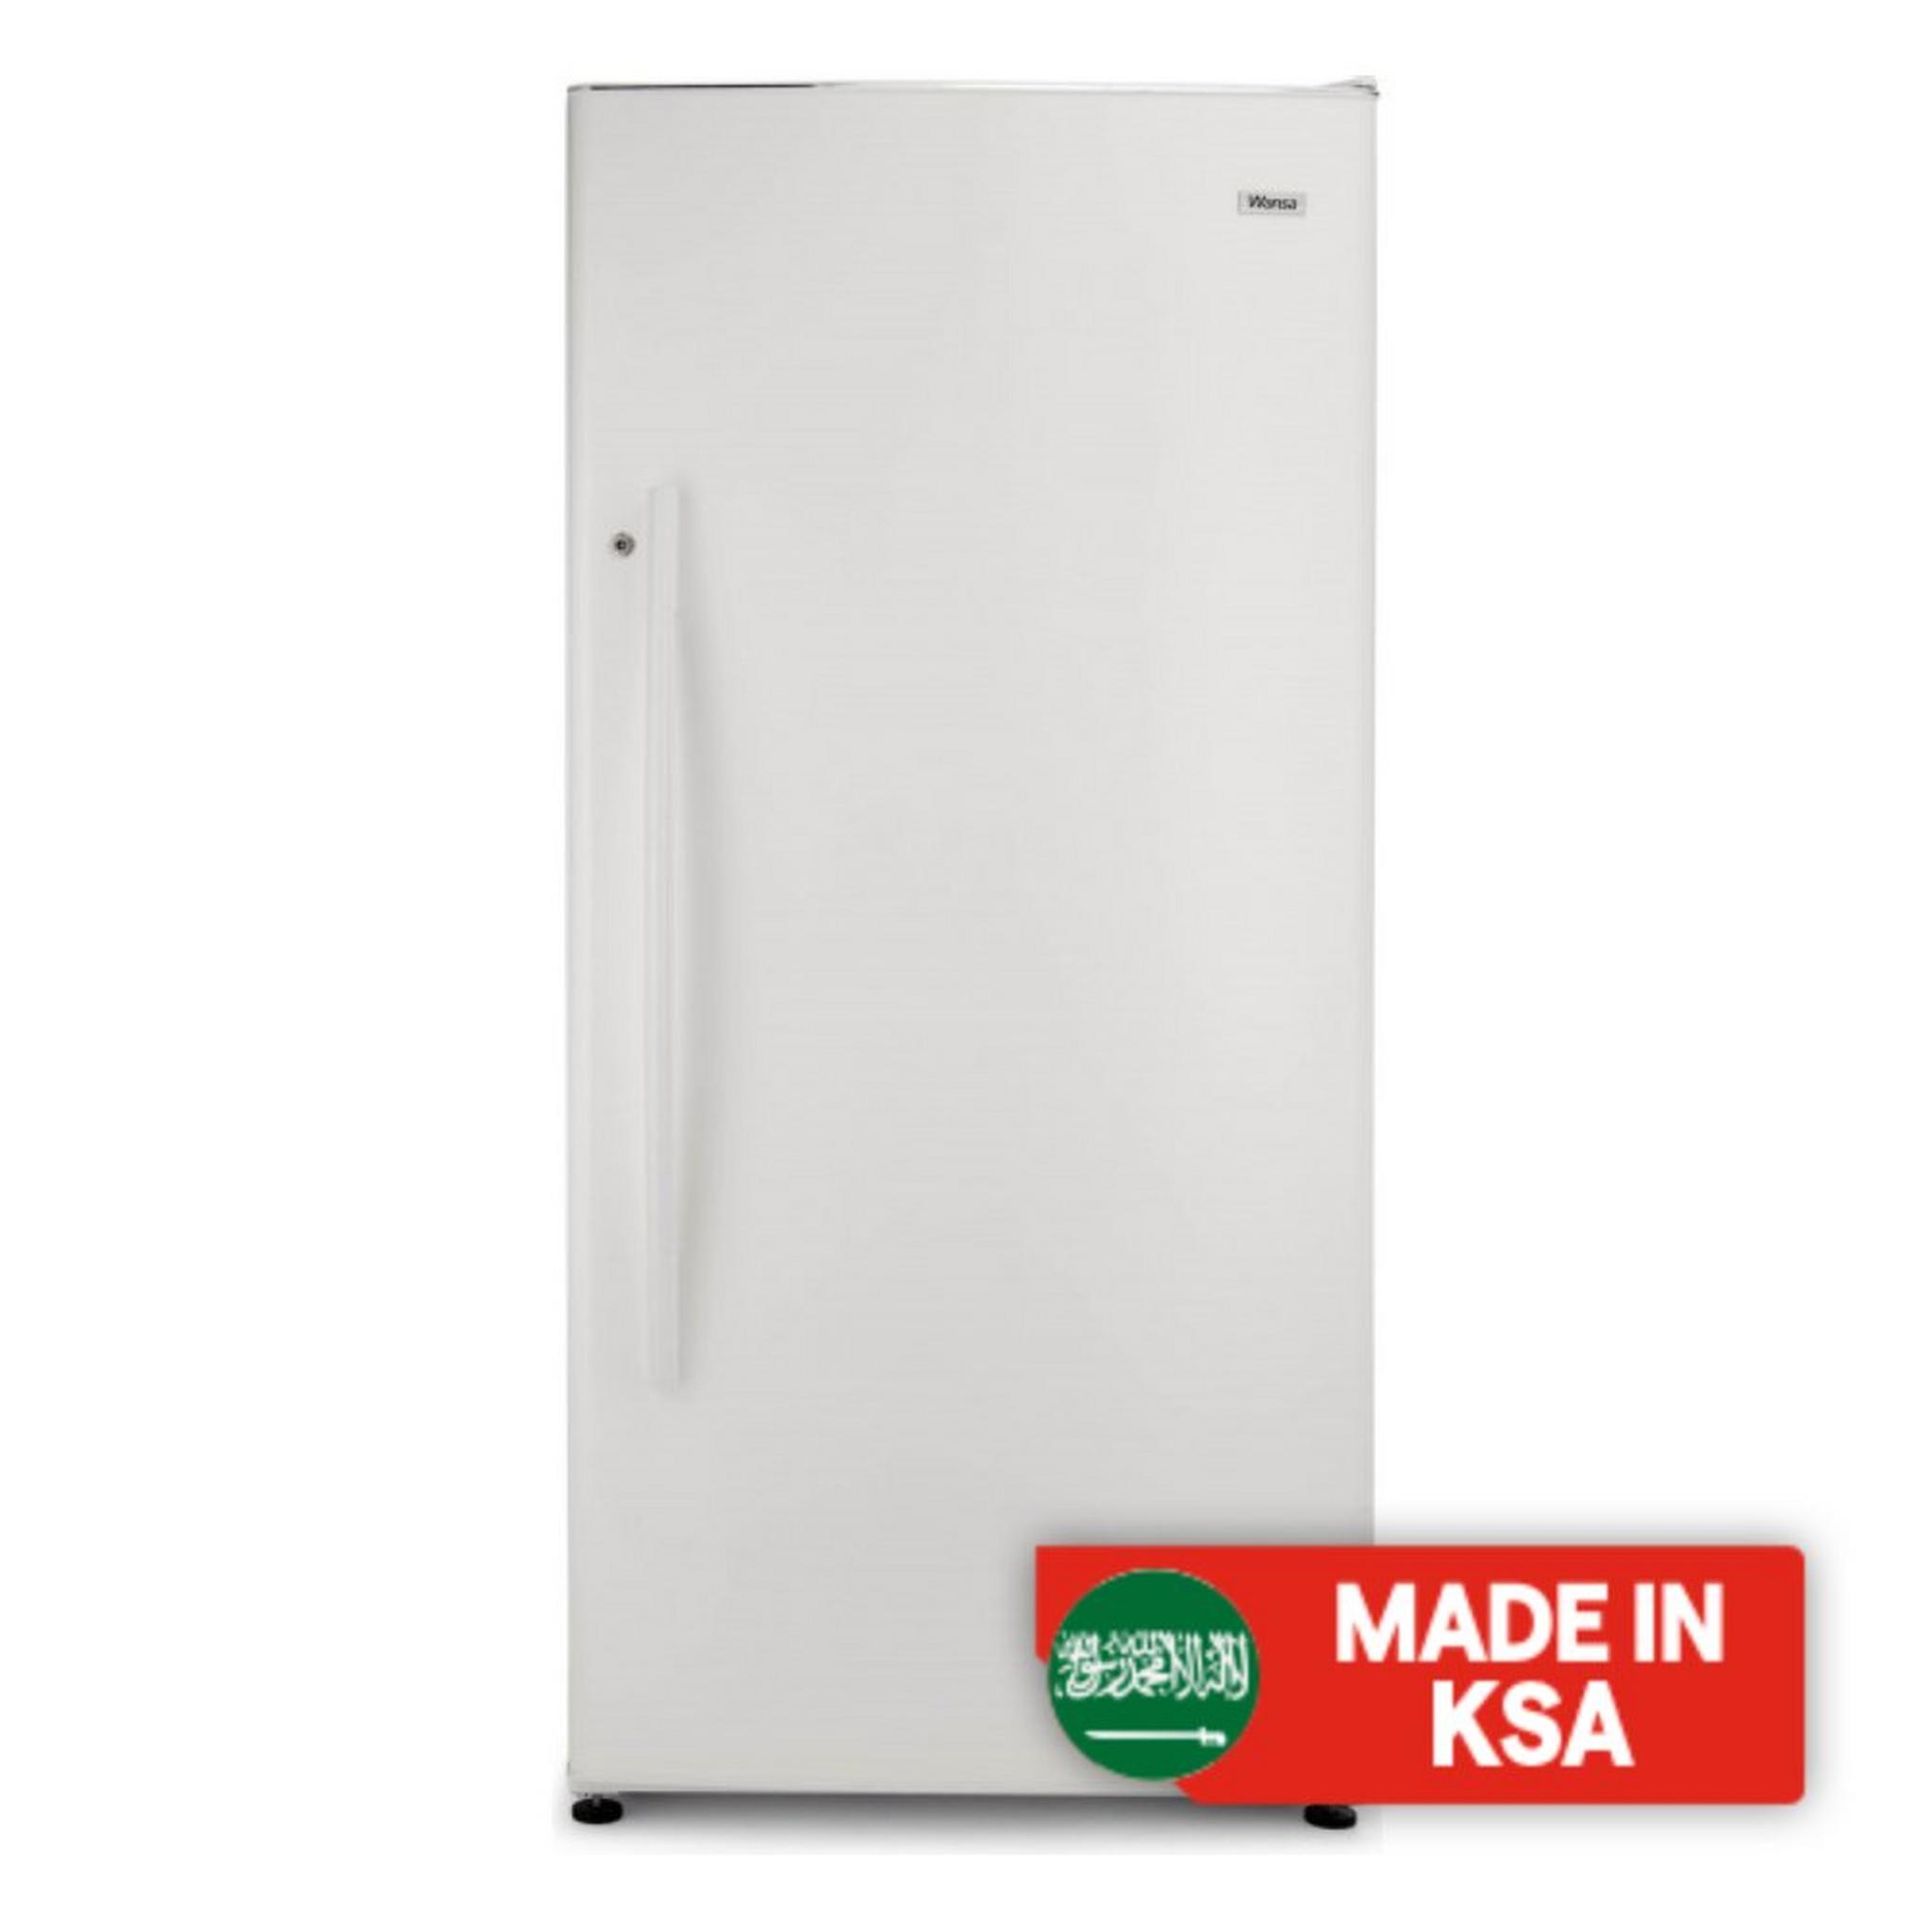 Wansa Single Door Refrigerator, 21.9CFT, 619-Liters, WROW-619-NFWTC32 - White